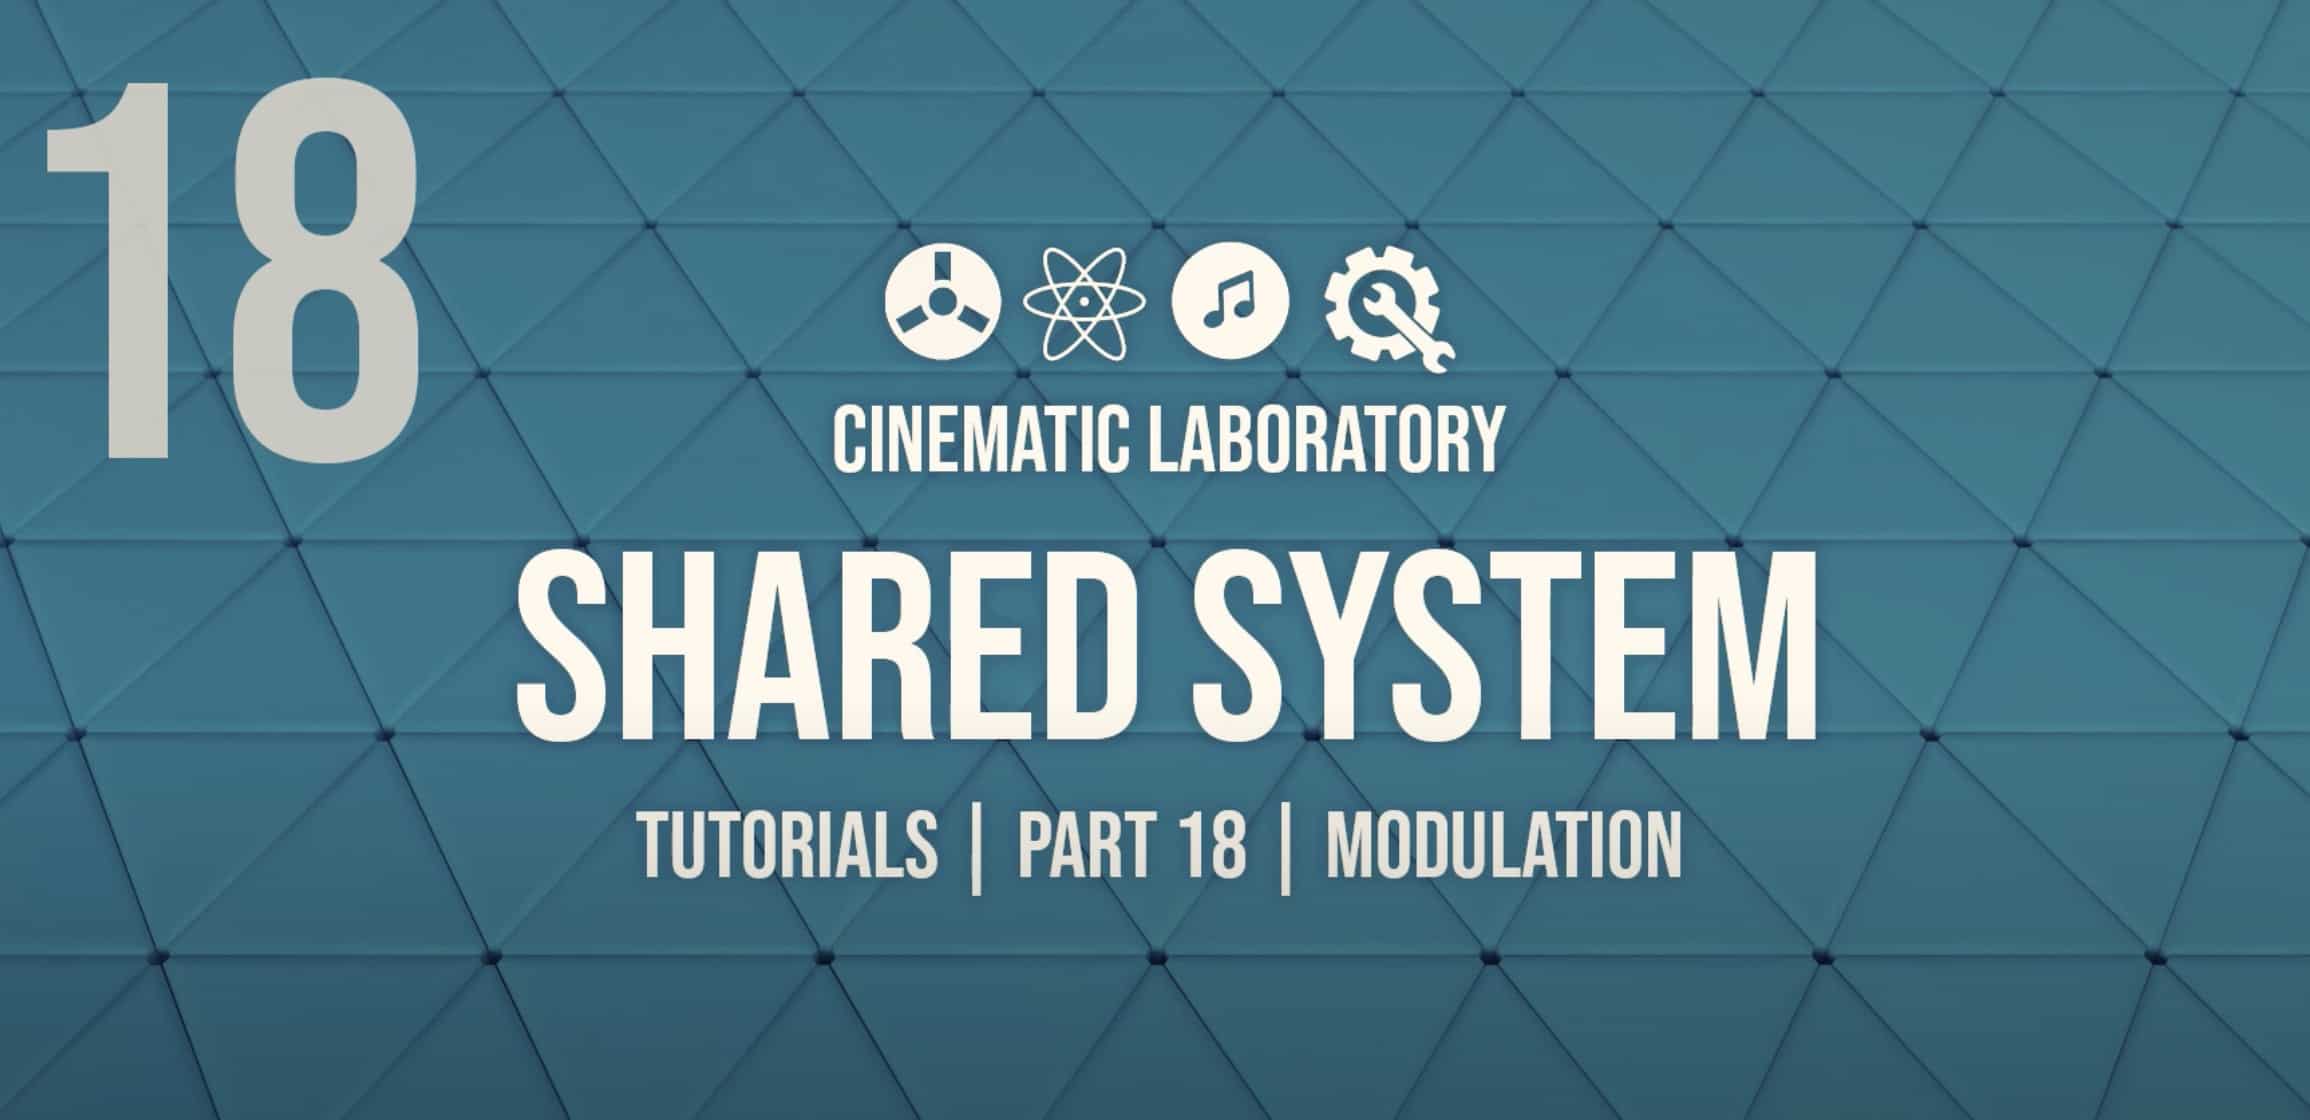 Shared System Tutorials Part 18 Modulation